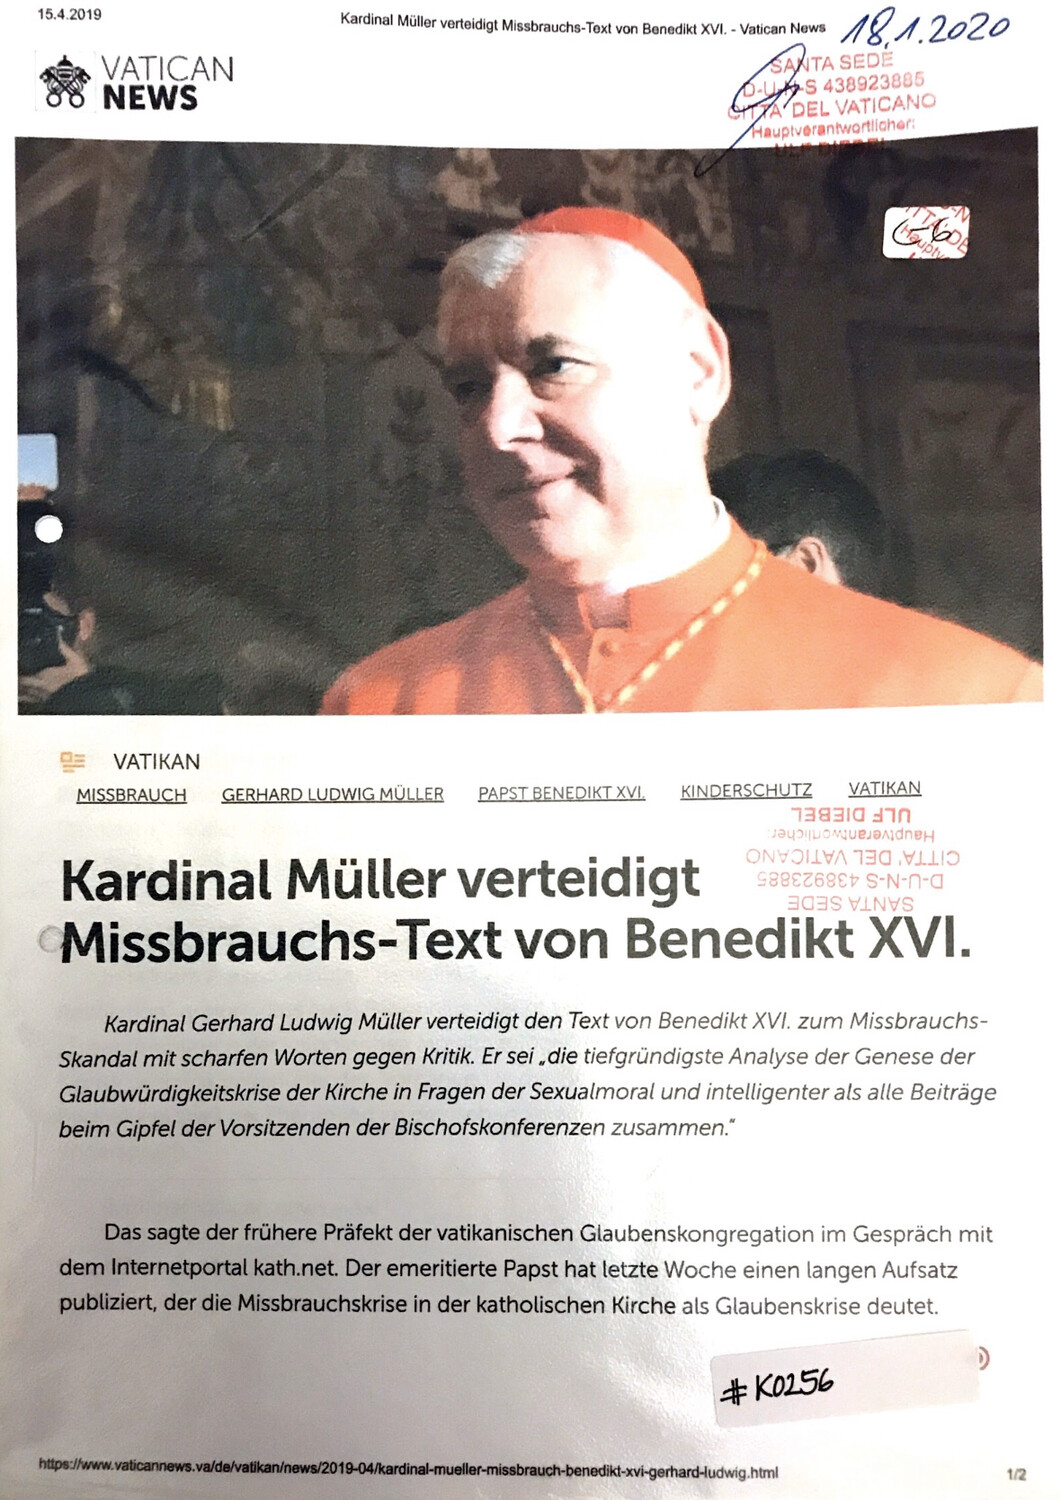 #K0256 l Vatican News - Kardinal Müller verteidigt Missbrauchs-Text von Benedikt XVI.